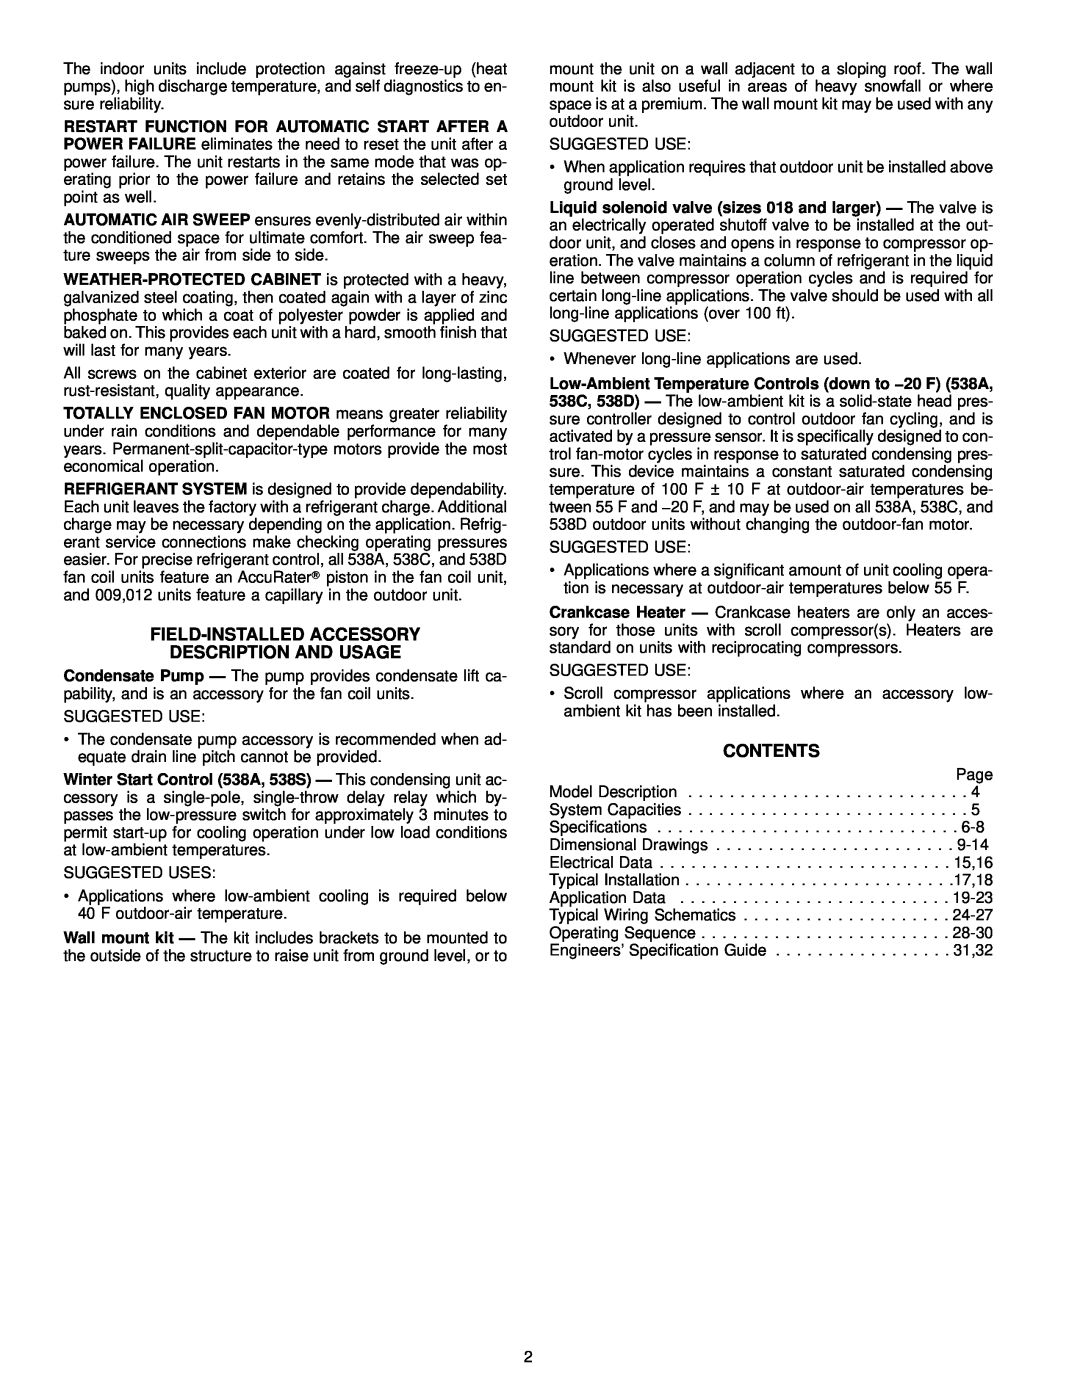 Bryant 619E manual Field-Installedaccessory Description And Usage, Contents 